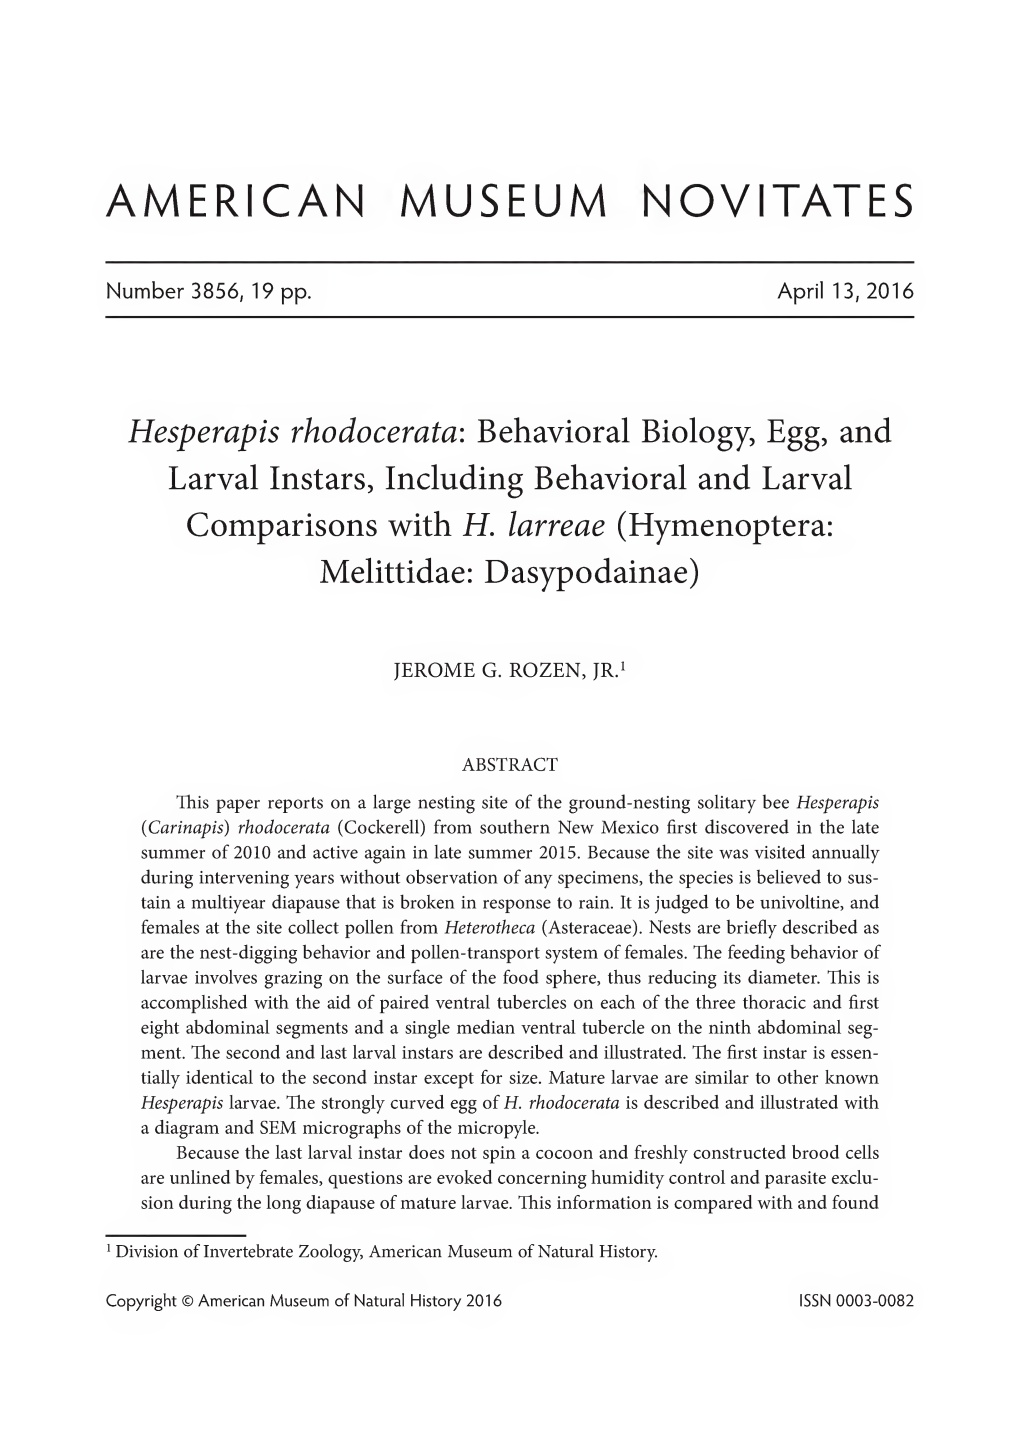 Hesperapis Rhodocerata : Behavioral Biology, Egg, and Larval Instars